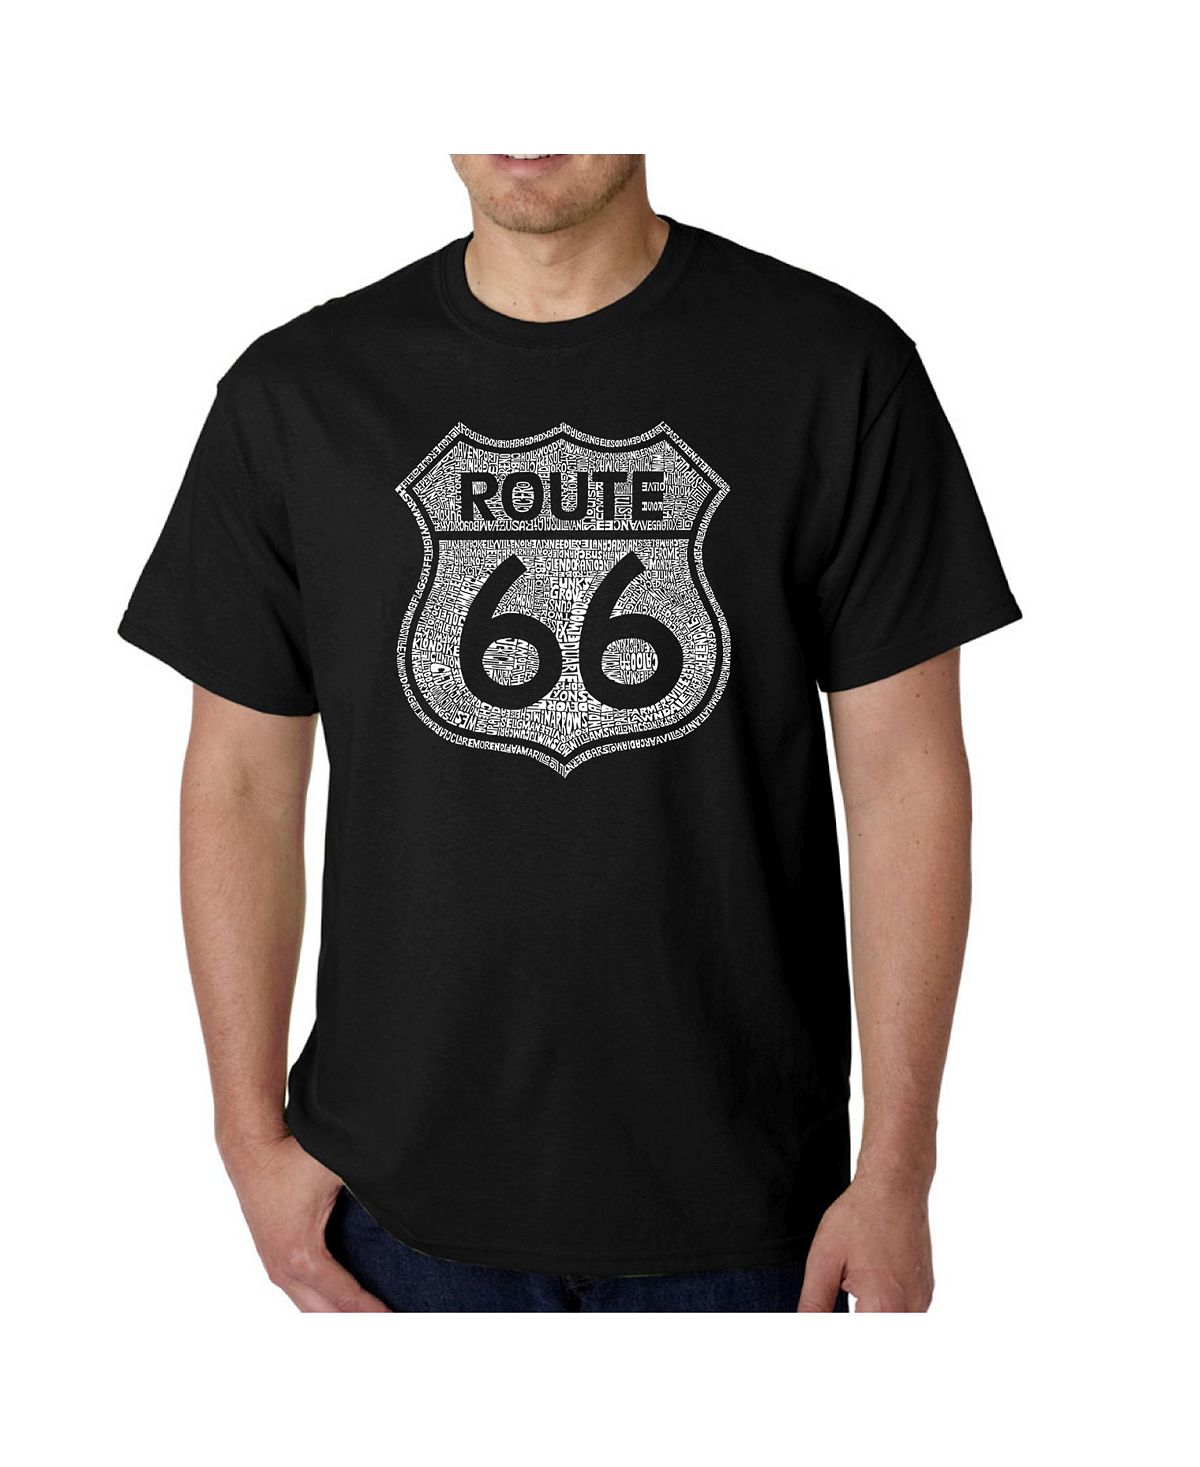 Мужская футболка с рисунком Word Art — Route 66 LA Pop Art мужская футболка с длинным рукавом word art route 66 la pop art черный